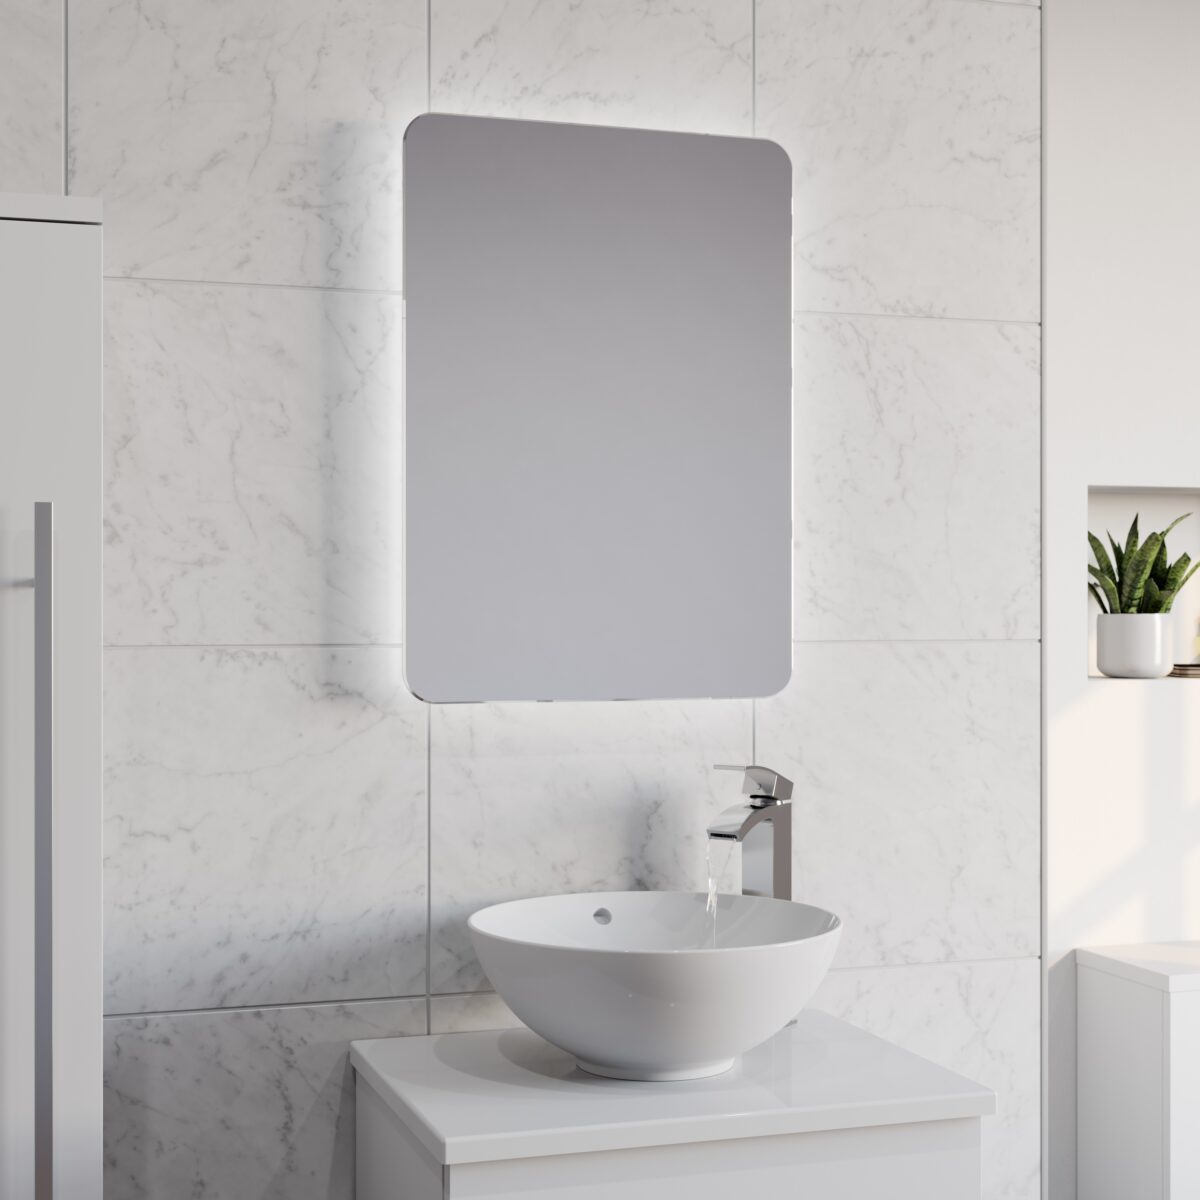 K-Vit Mirrors - Garda LED Illuminated Bathroom Mirror with toothbrush charger- MIR005